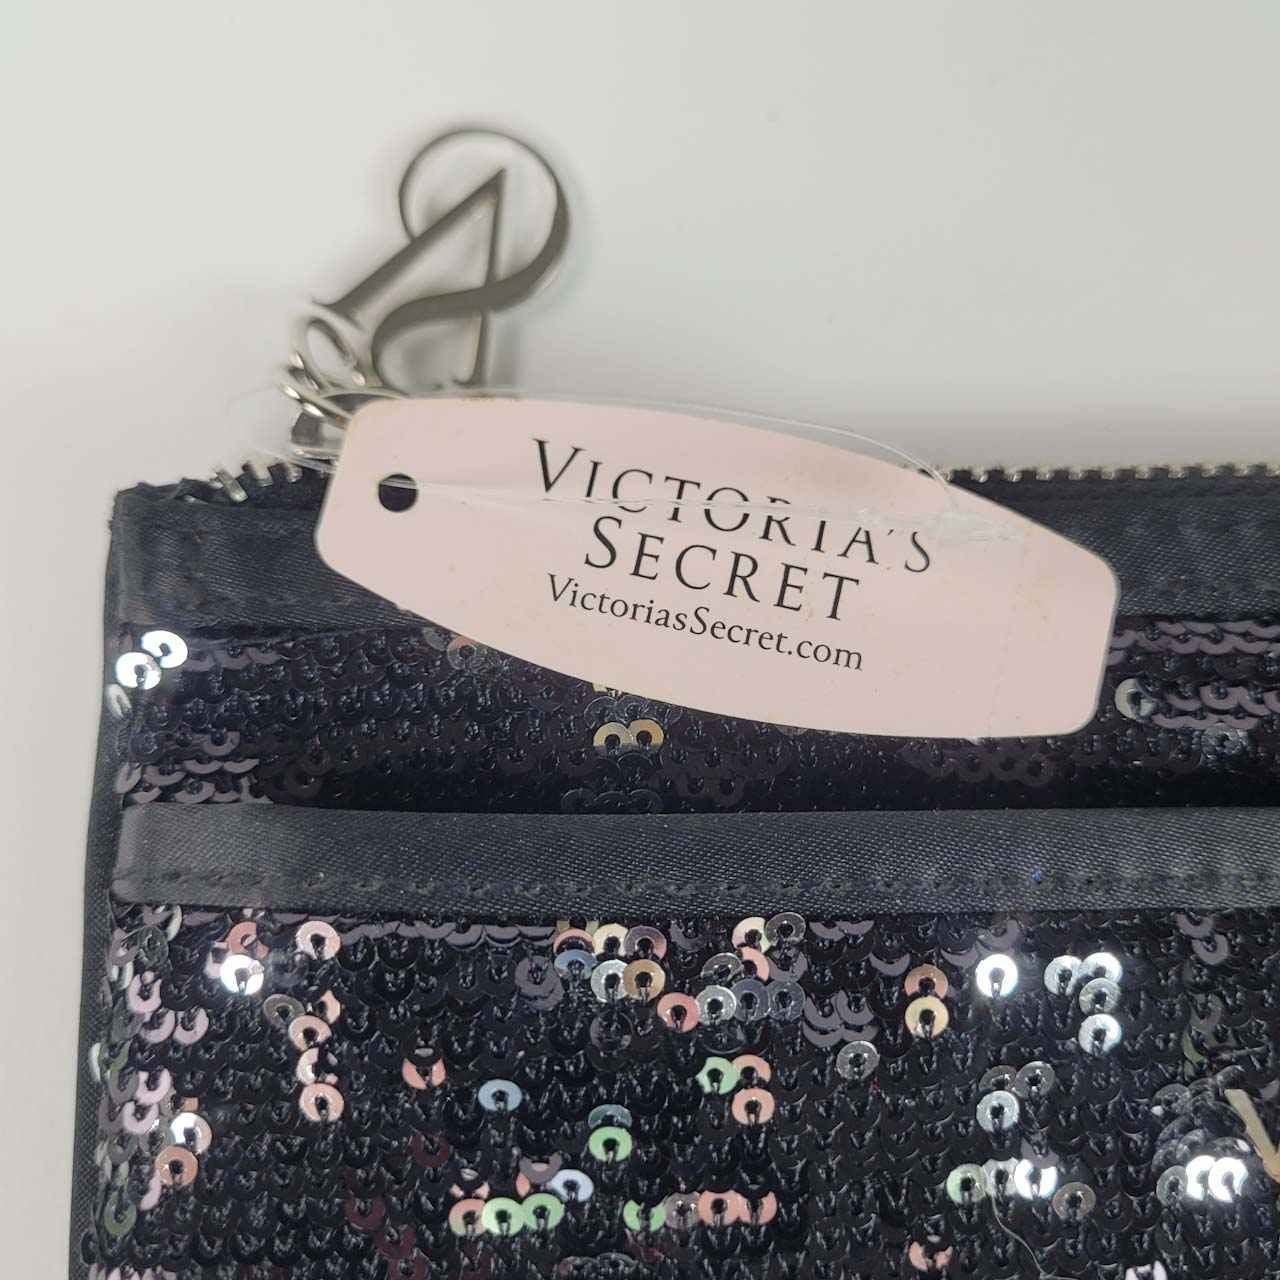 Victoria's Secret - Sequined Clutch Purse - Black & Silver - NEW - NWT